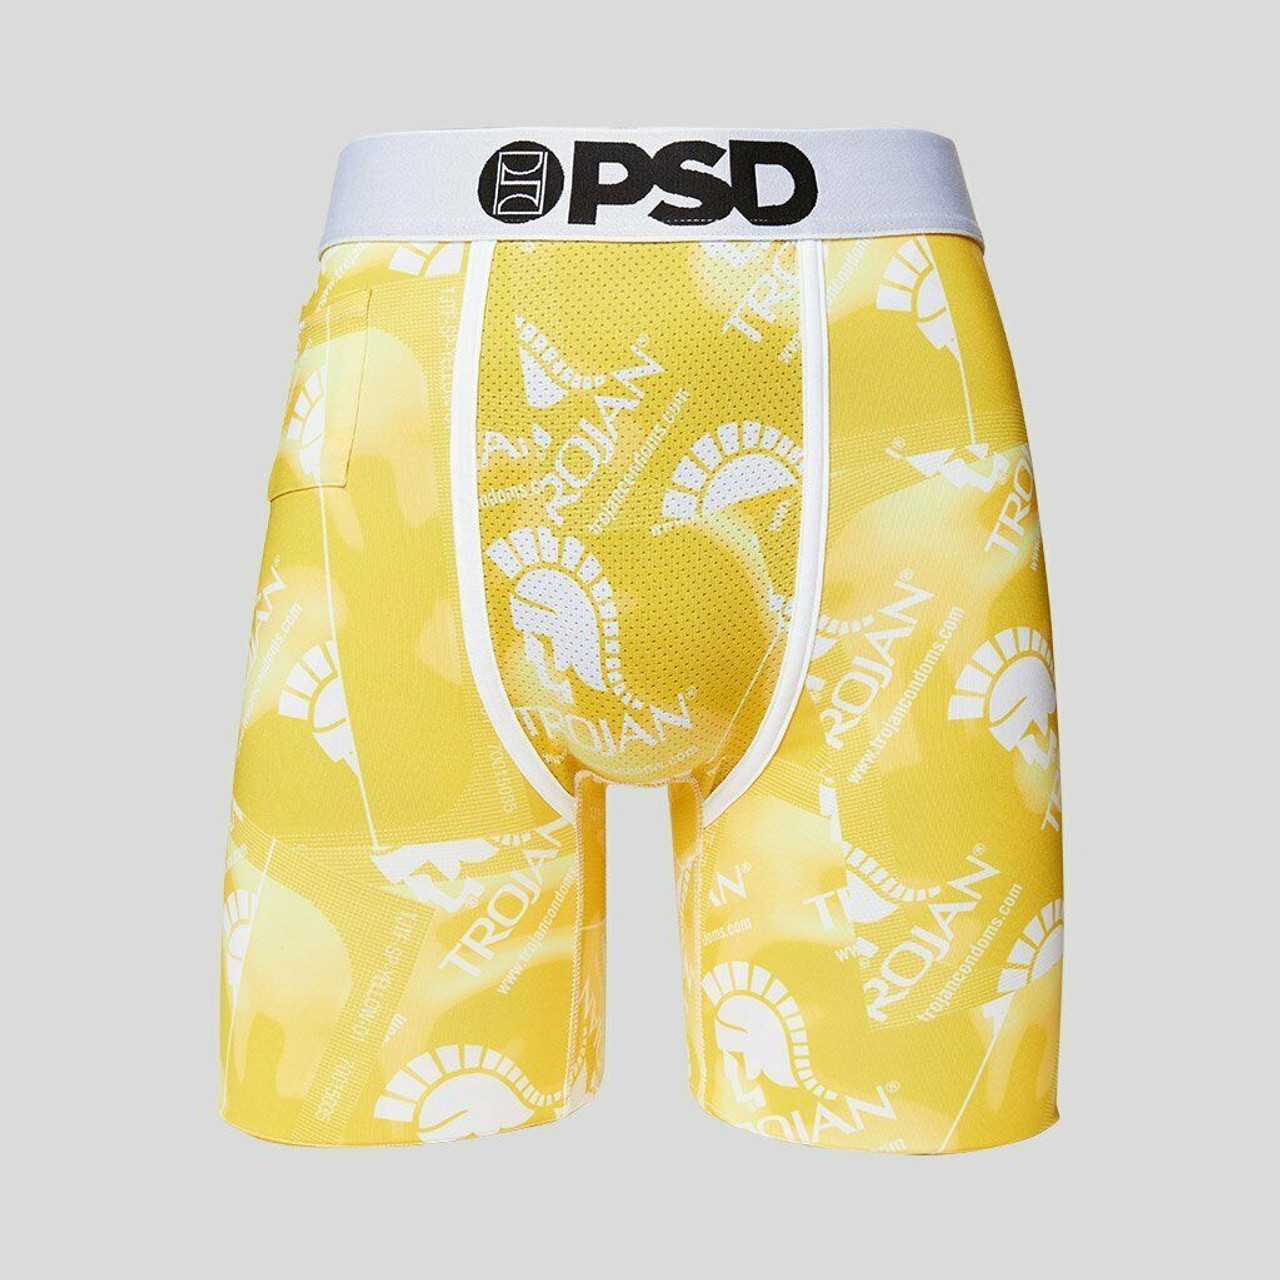 PSD Trojan Condoms Magnum XL Urban Athletic Boxers Briefs Underwear  42011033